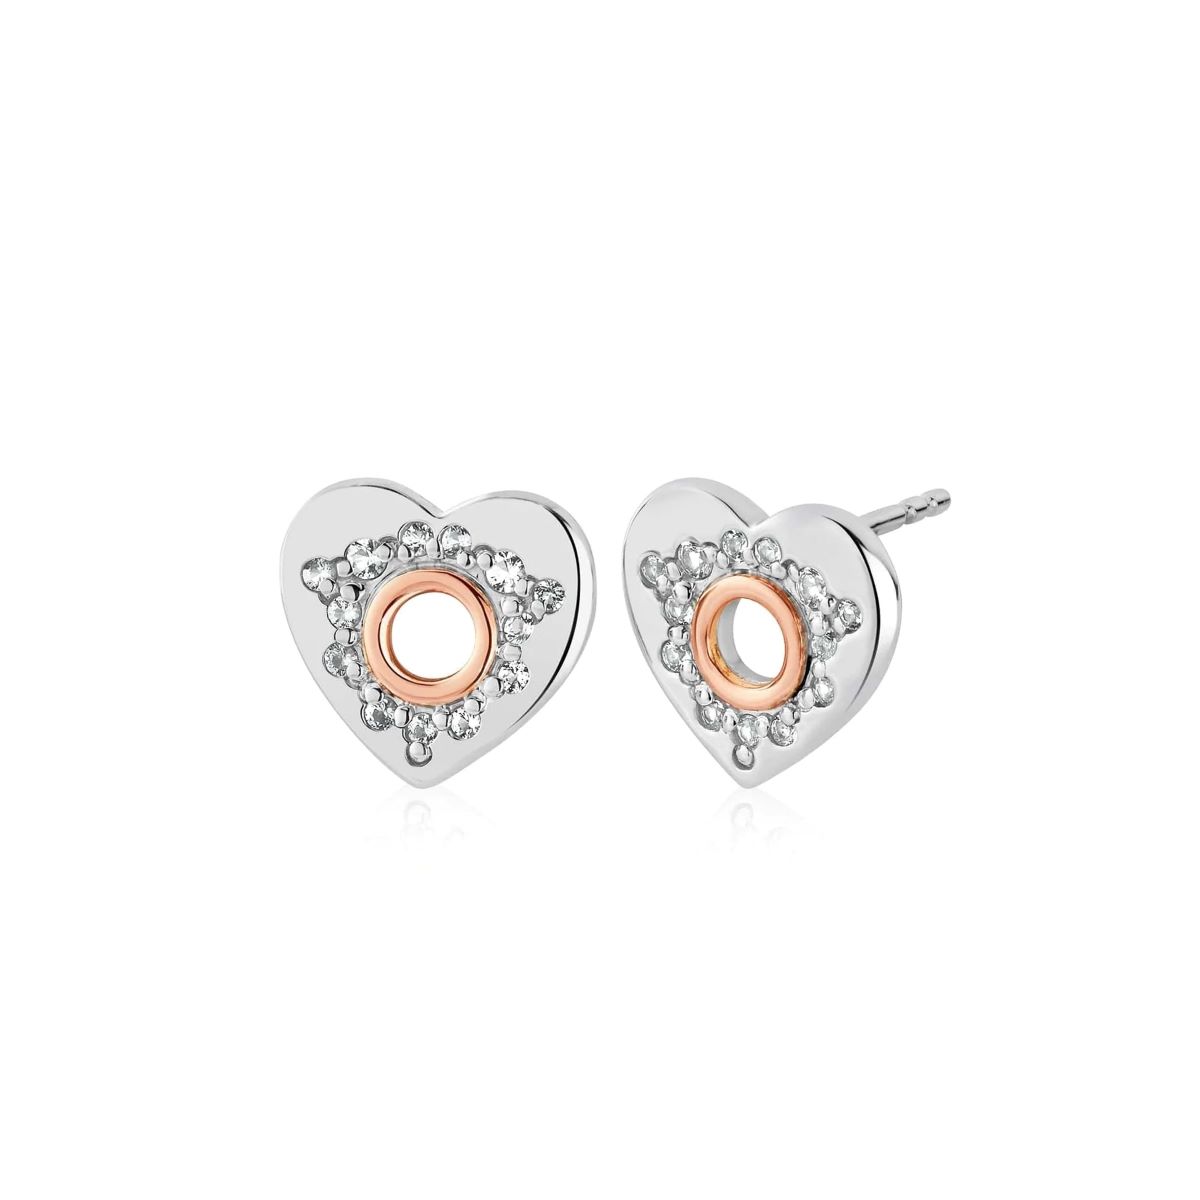 Clogau Cariad Sparkle Stud Earrings - 3SCRS0652